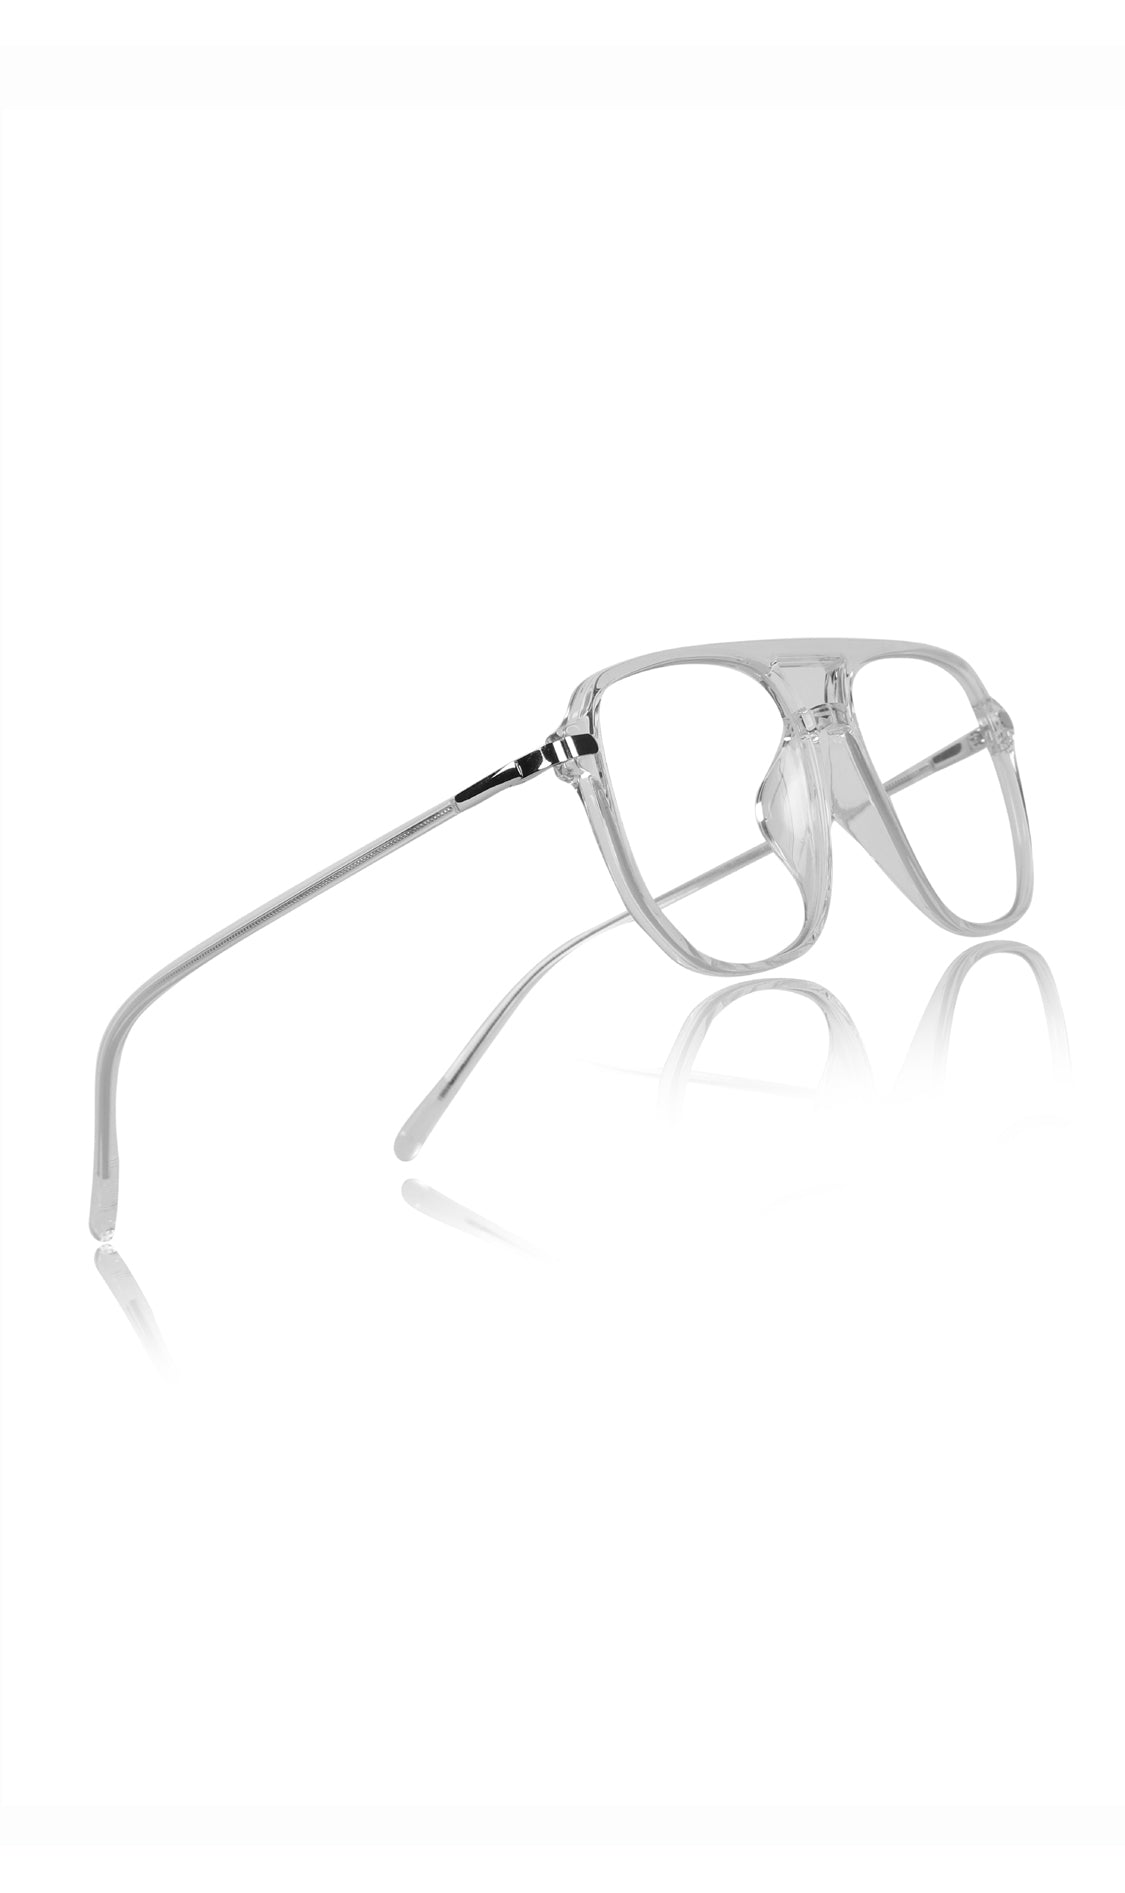 Jodykoes® Premium Oversized Eyeglass Frames: Stylish Anti-Glare and Blue Light Blocking Glasses for Enhanced Computer and Mobile Phone Protection, Unisex Design (Transparent)